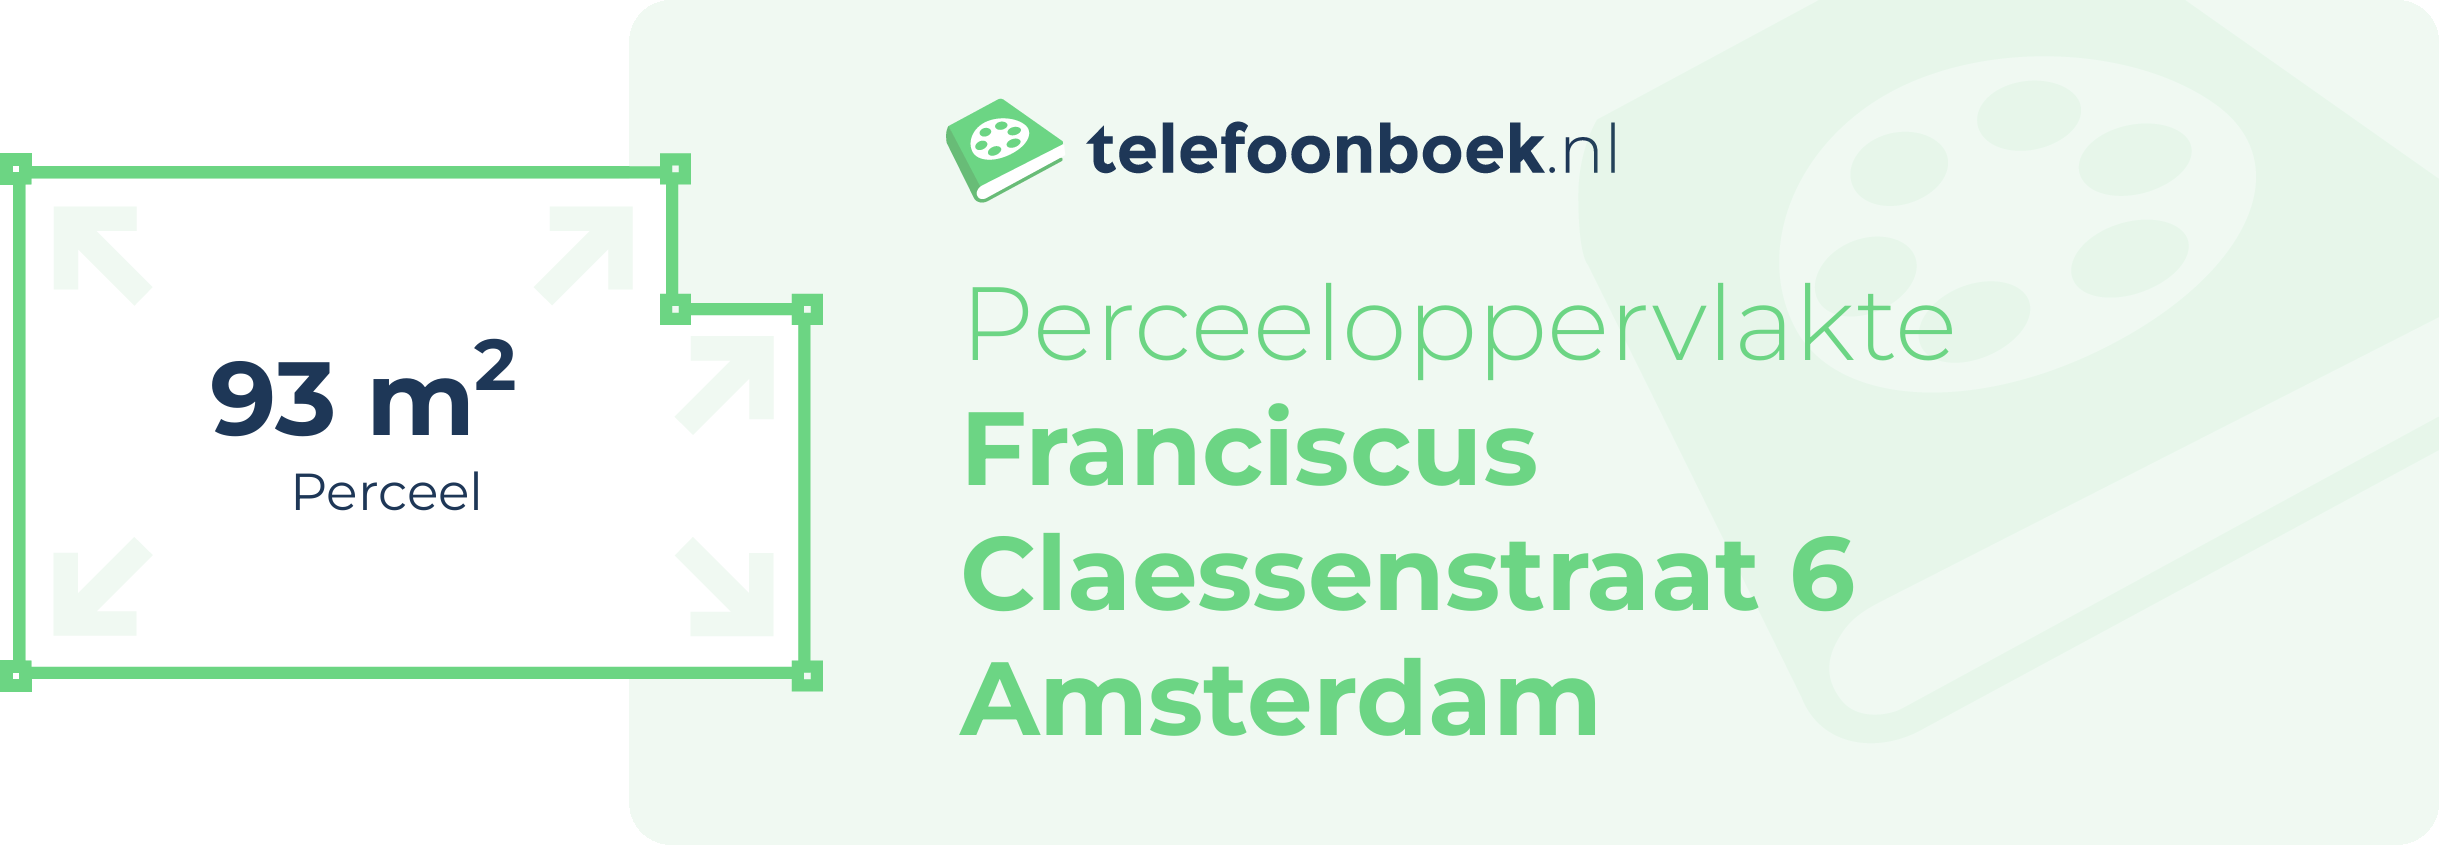 Perceeloppervlakte Franciscus Claessenstraat 6 Amsterdam